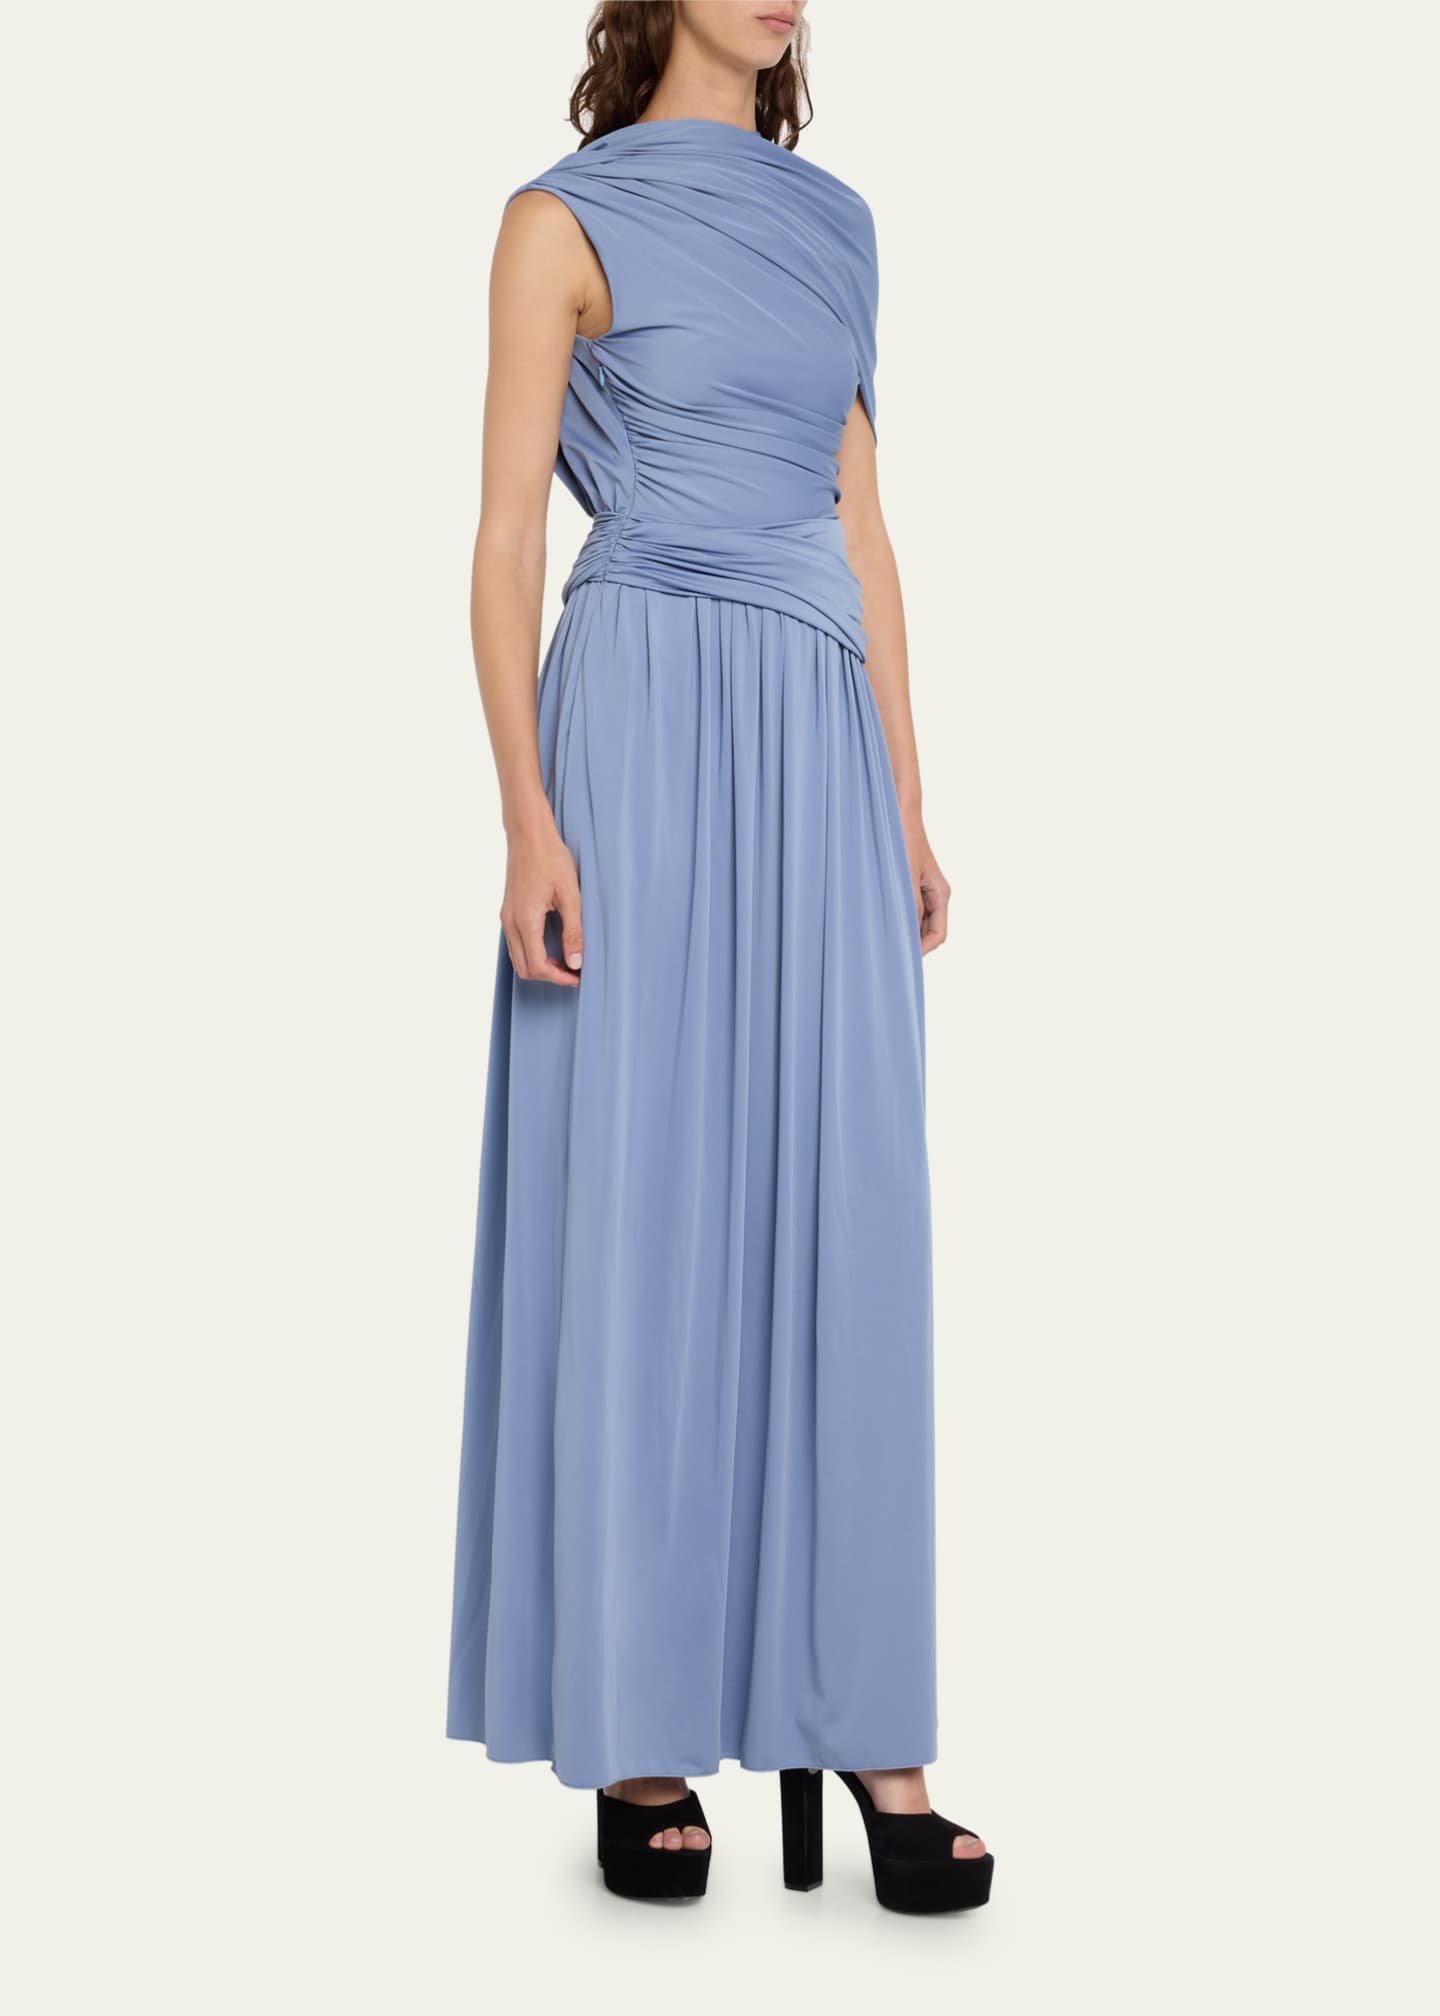 Altuzarra Delphi Draped One-Shoulder Gown - Bergdorf Goodman